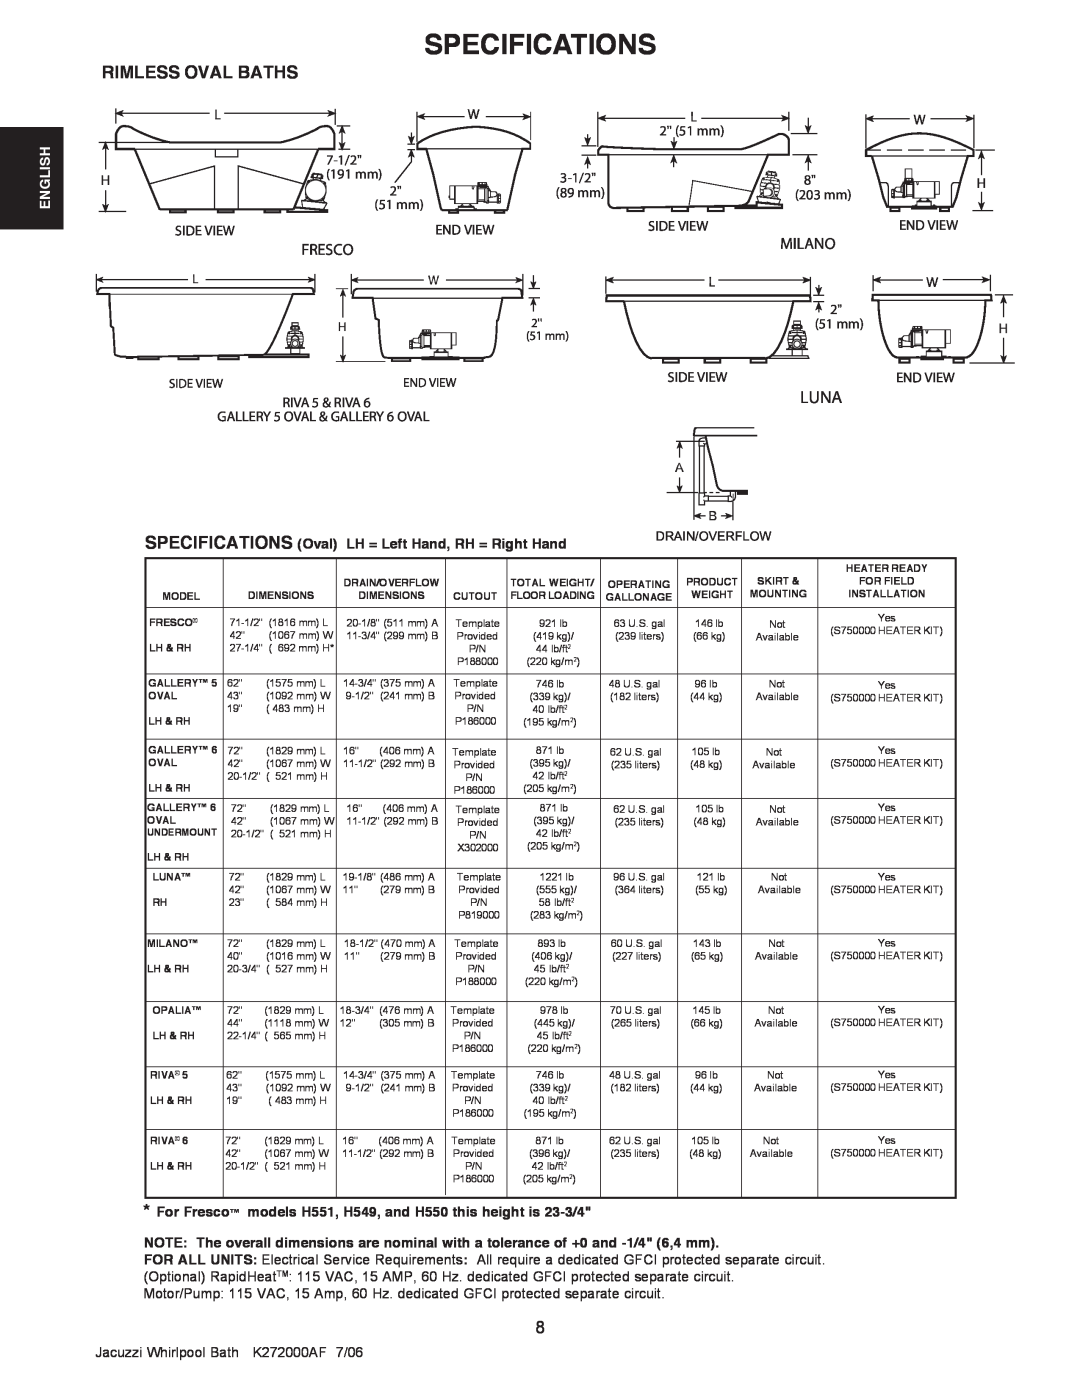 Jacuzzi K272000AF 7/06 manual Specifications, Rimless Oval Baths, Luna, Fresco, English, RIVA 5 & RIVA 